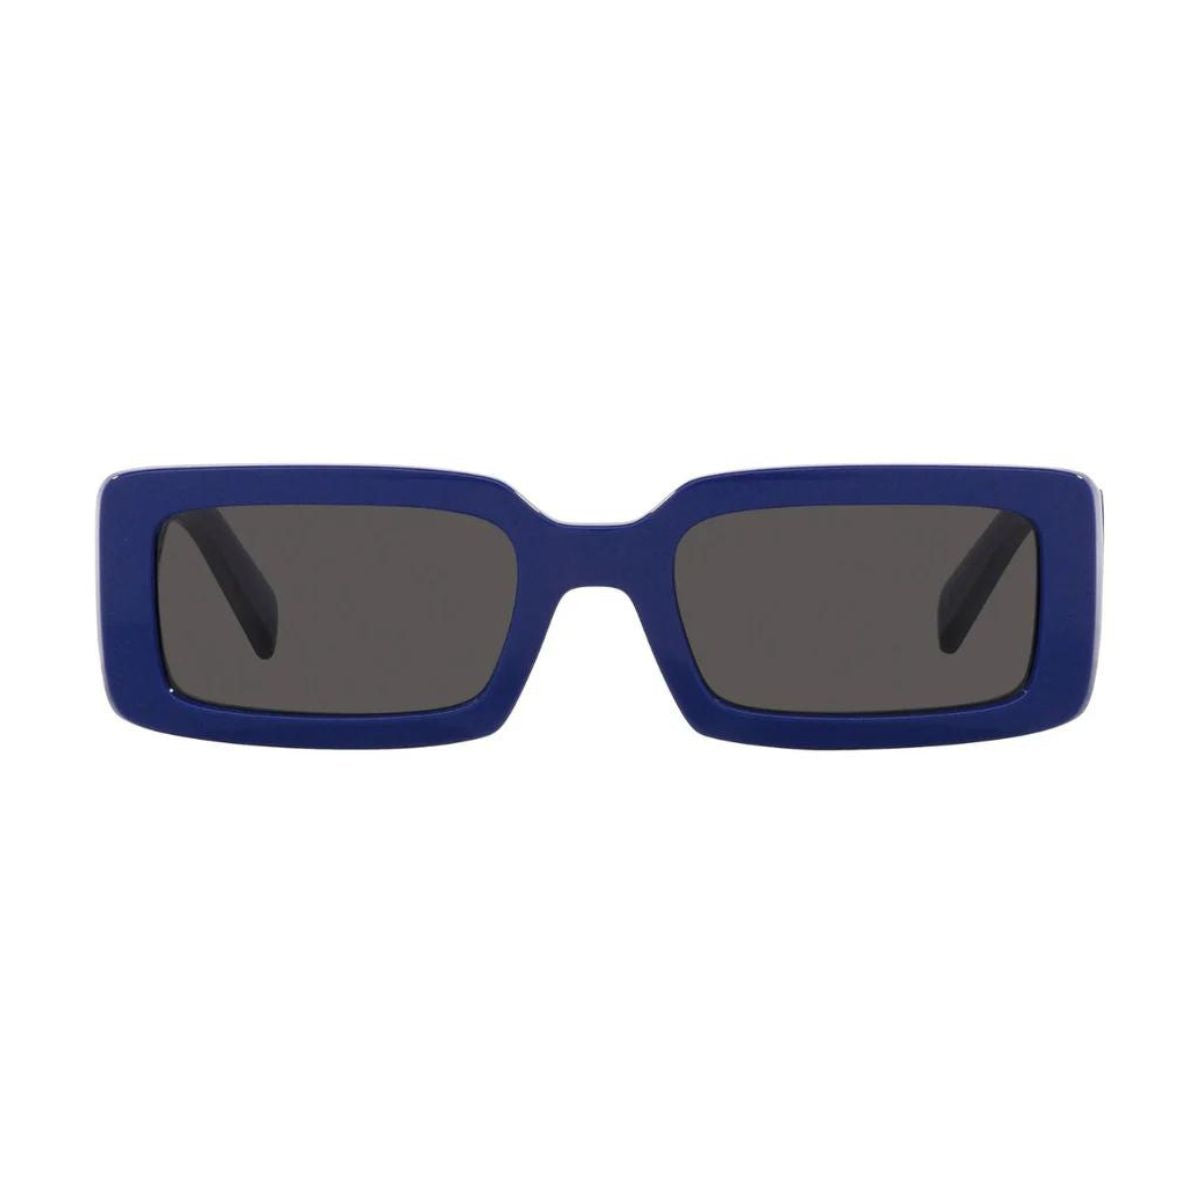 "Trendy Dolce & Gabbana DG6187 3094/87 sunglasses with UV protection, blue frame"